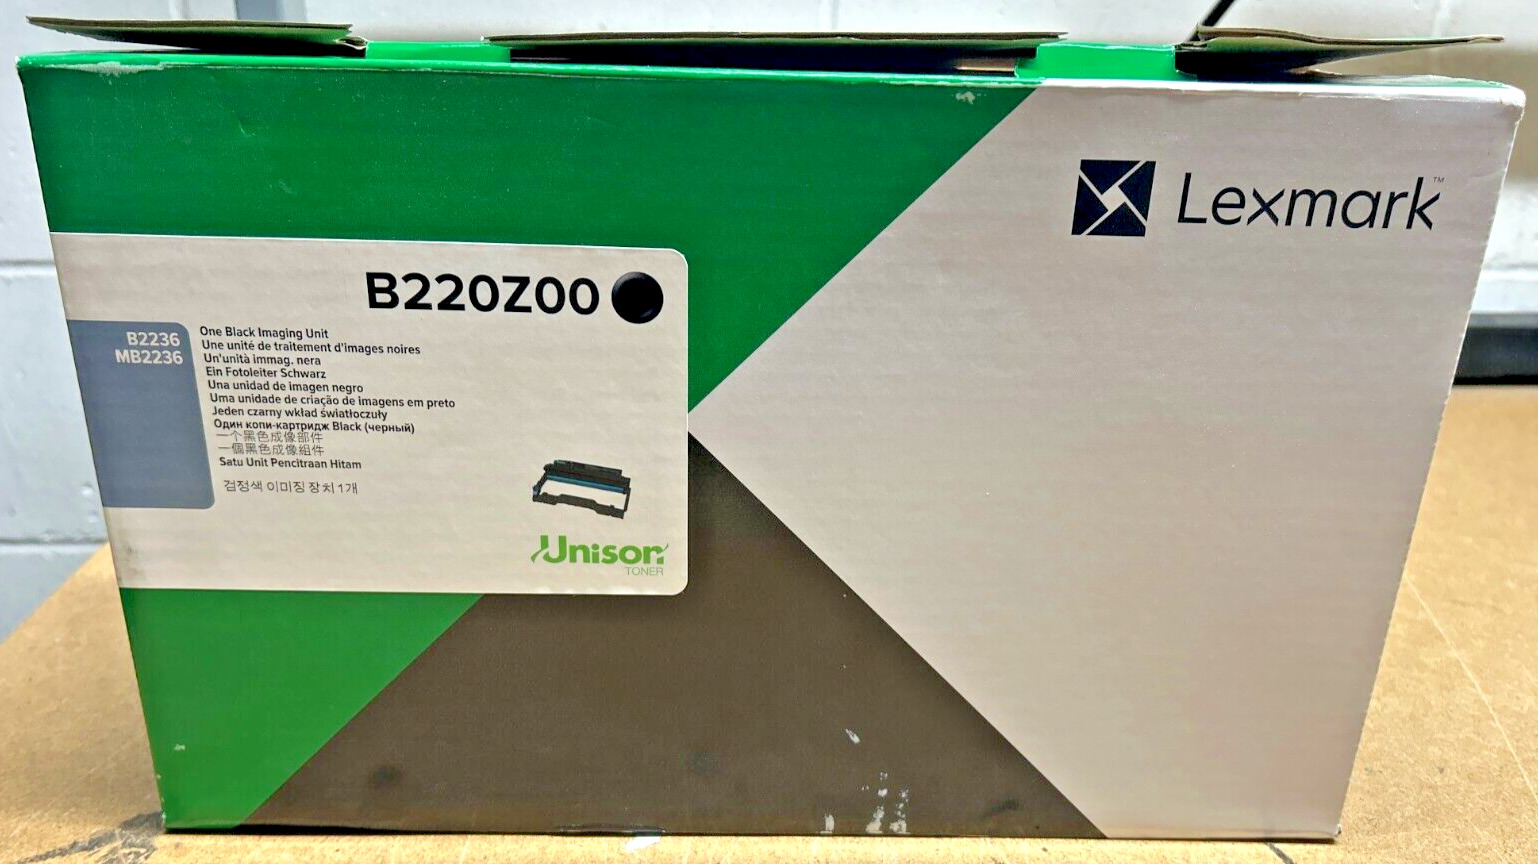 Genuine Lexmark B220Z00 Black Imaging Unit for B2236 / MB2236